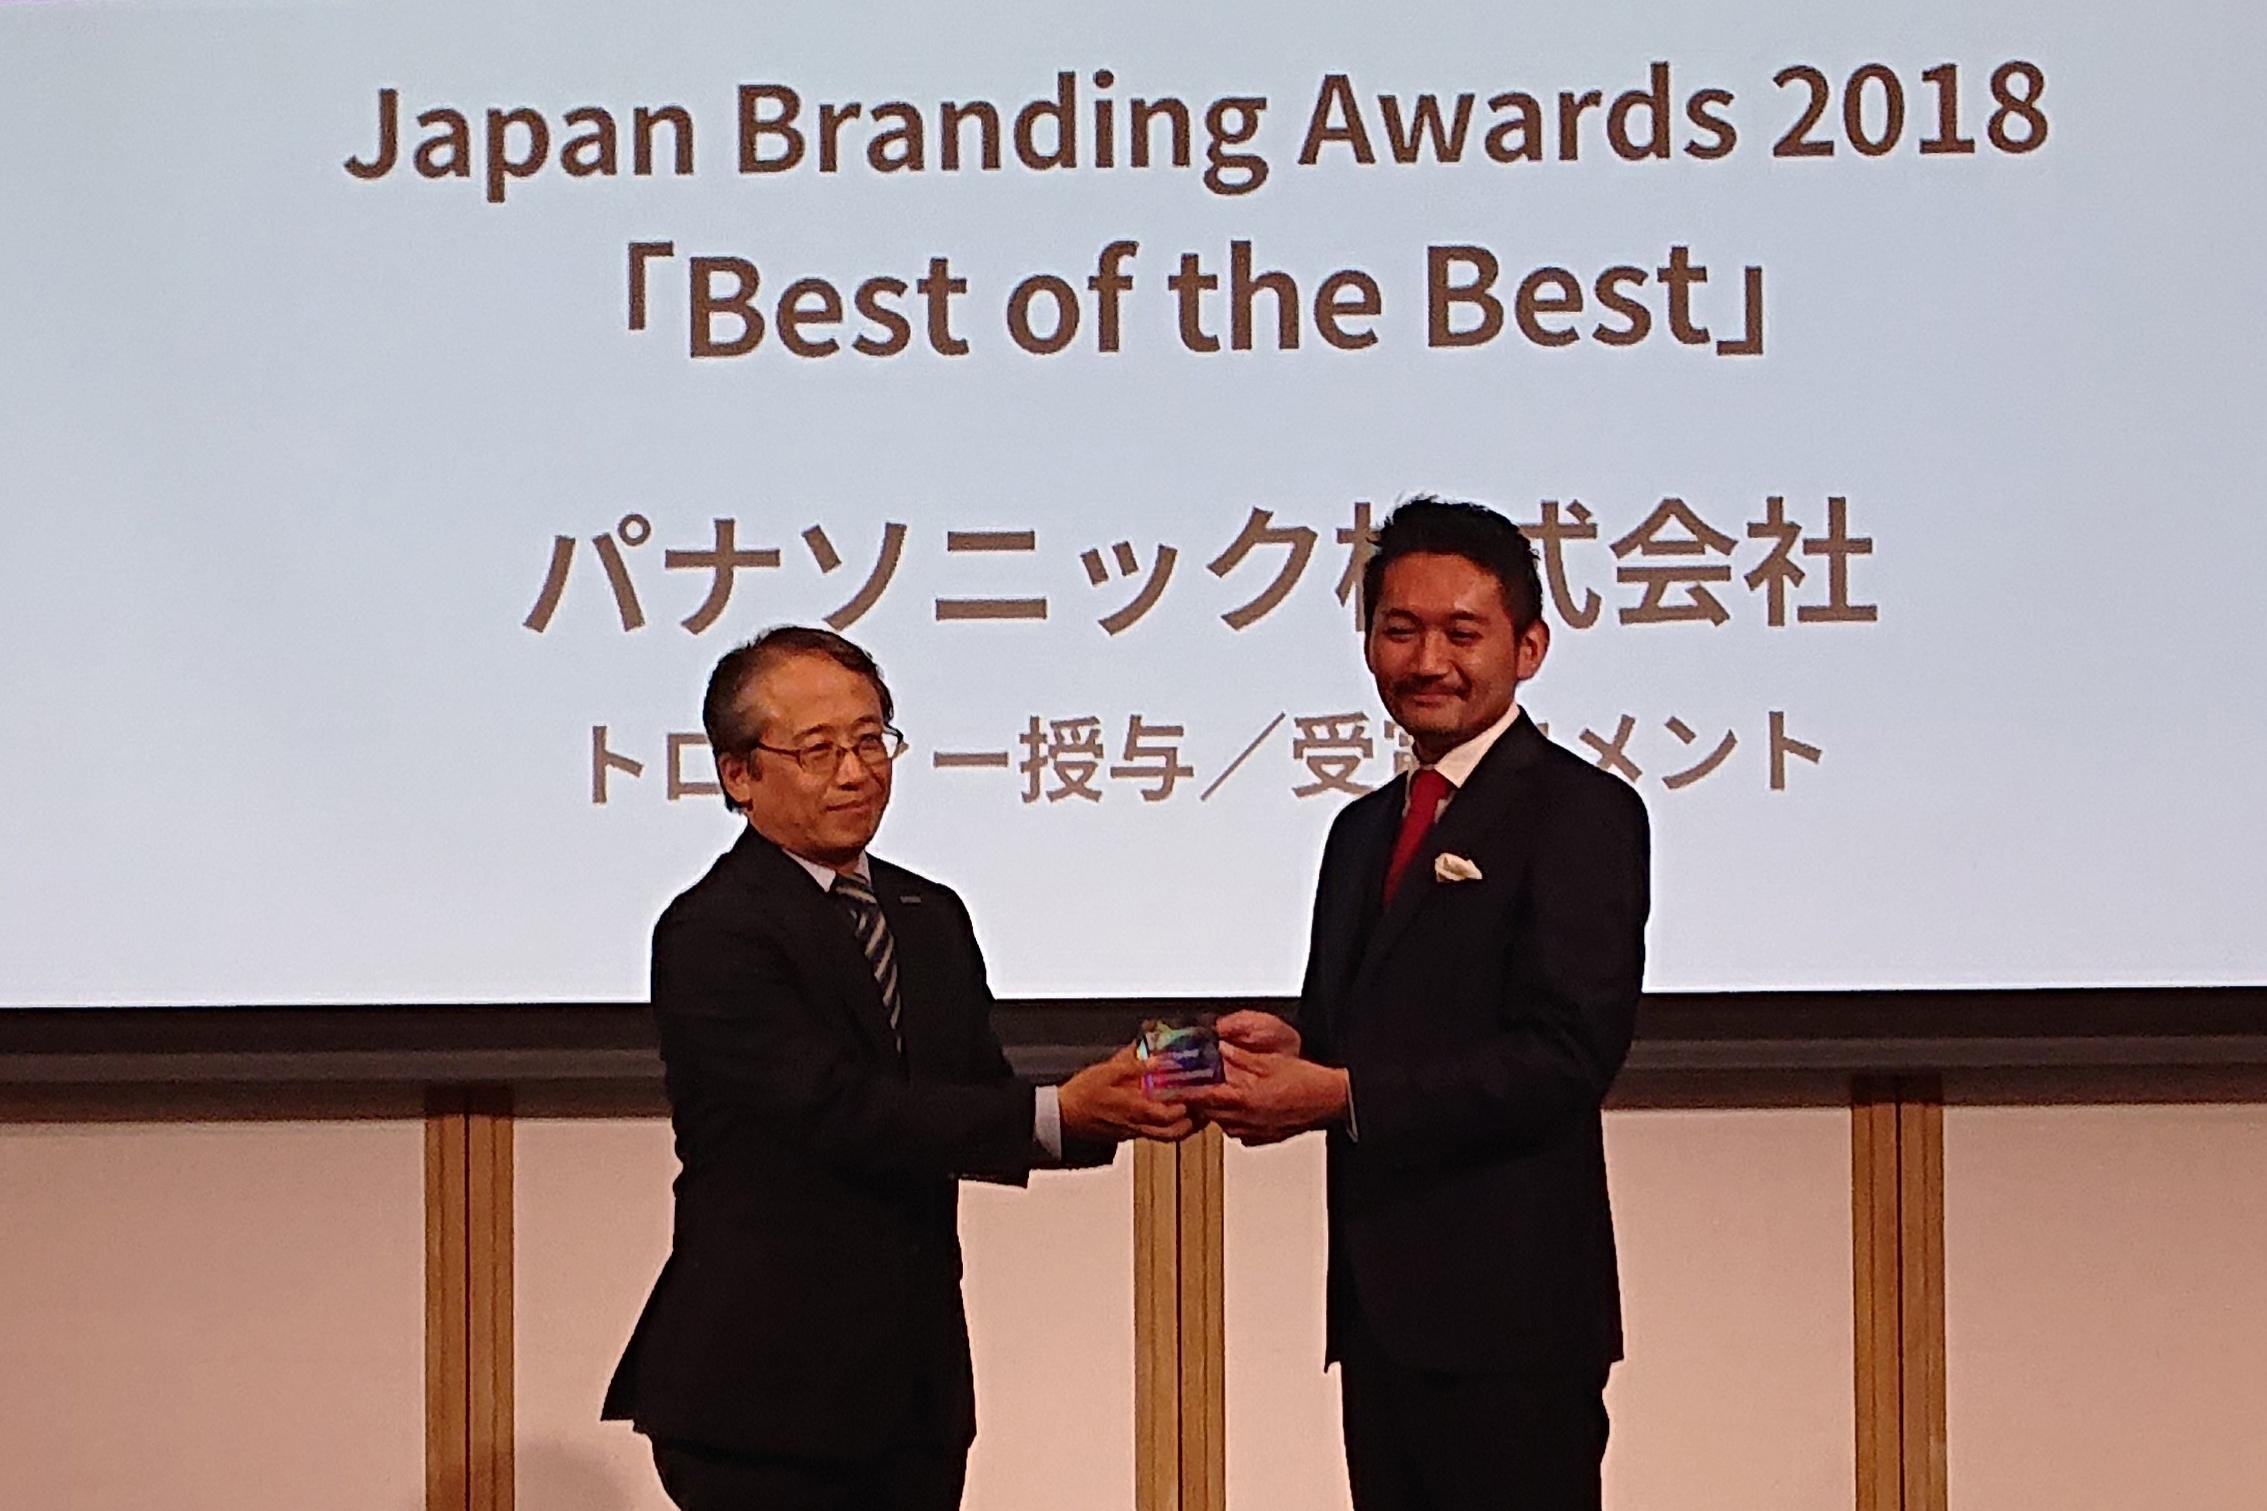 photo: The Japan Branding Awards 2018 award ceremony